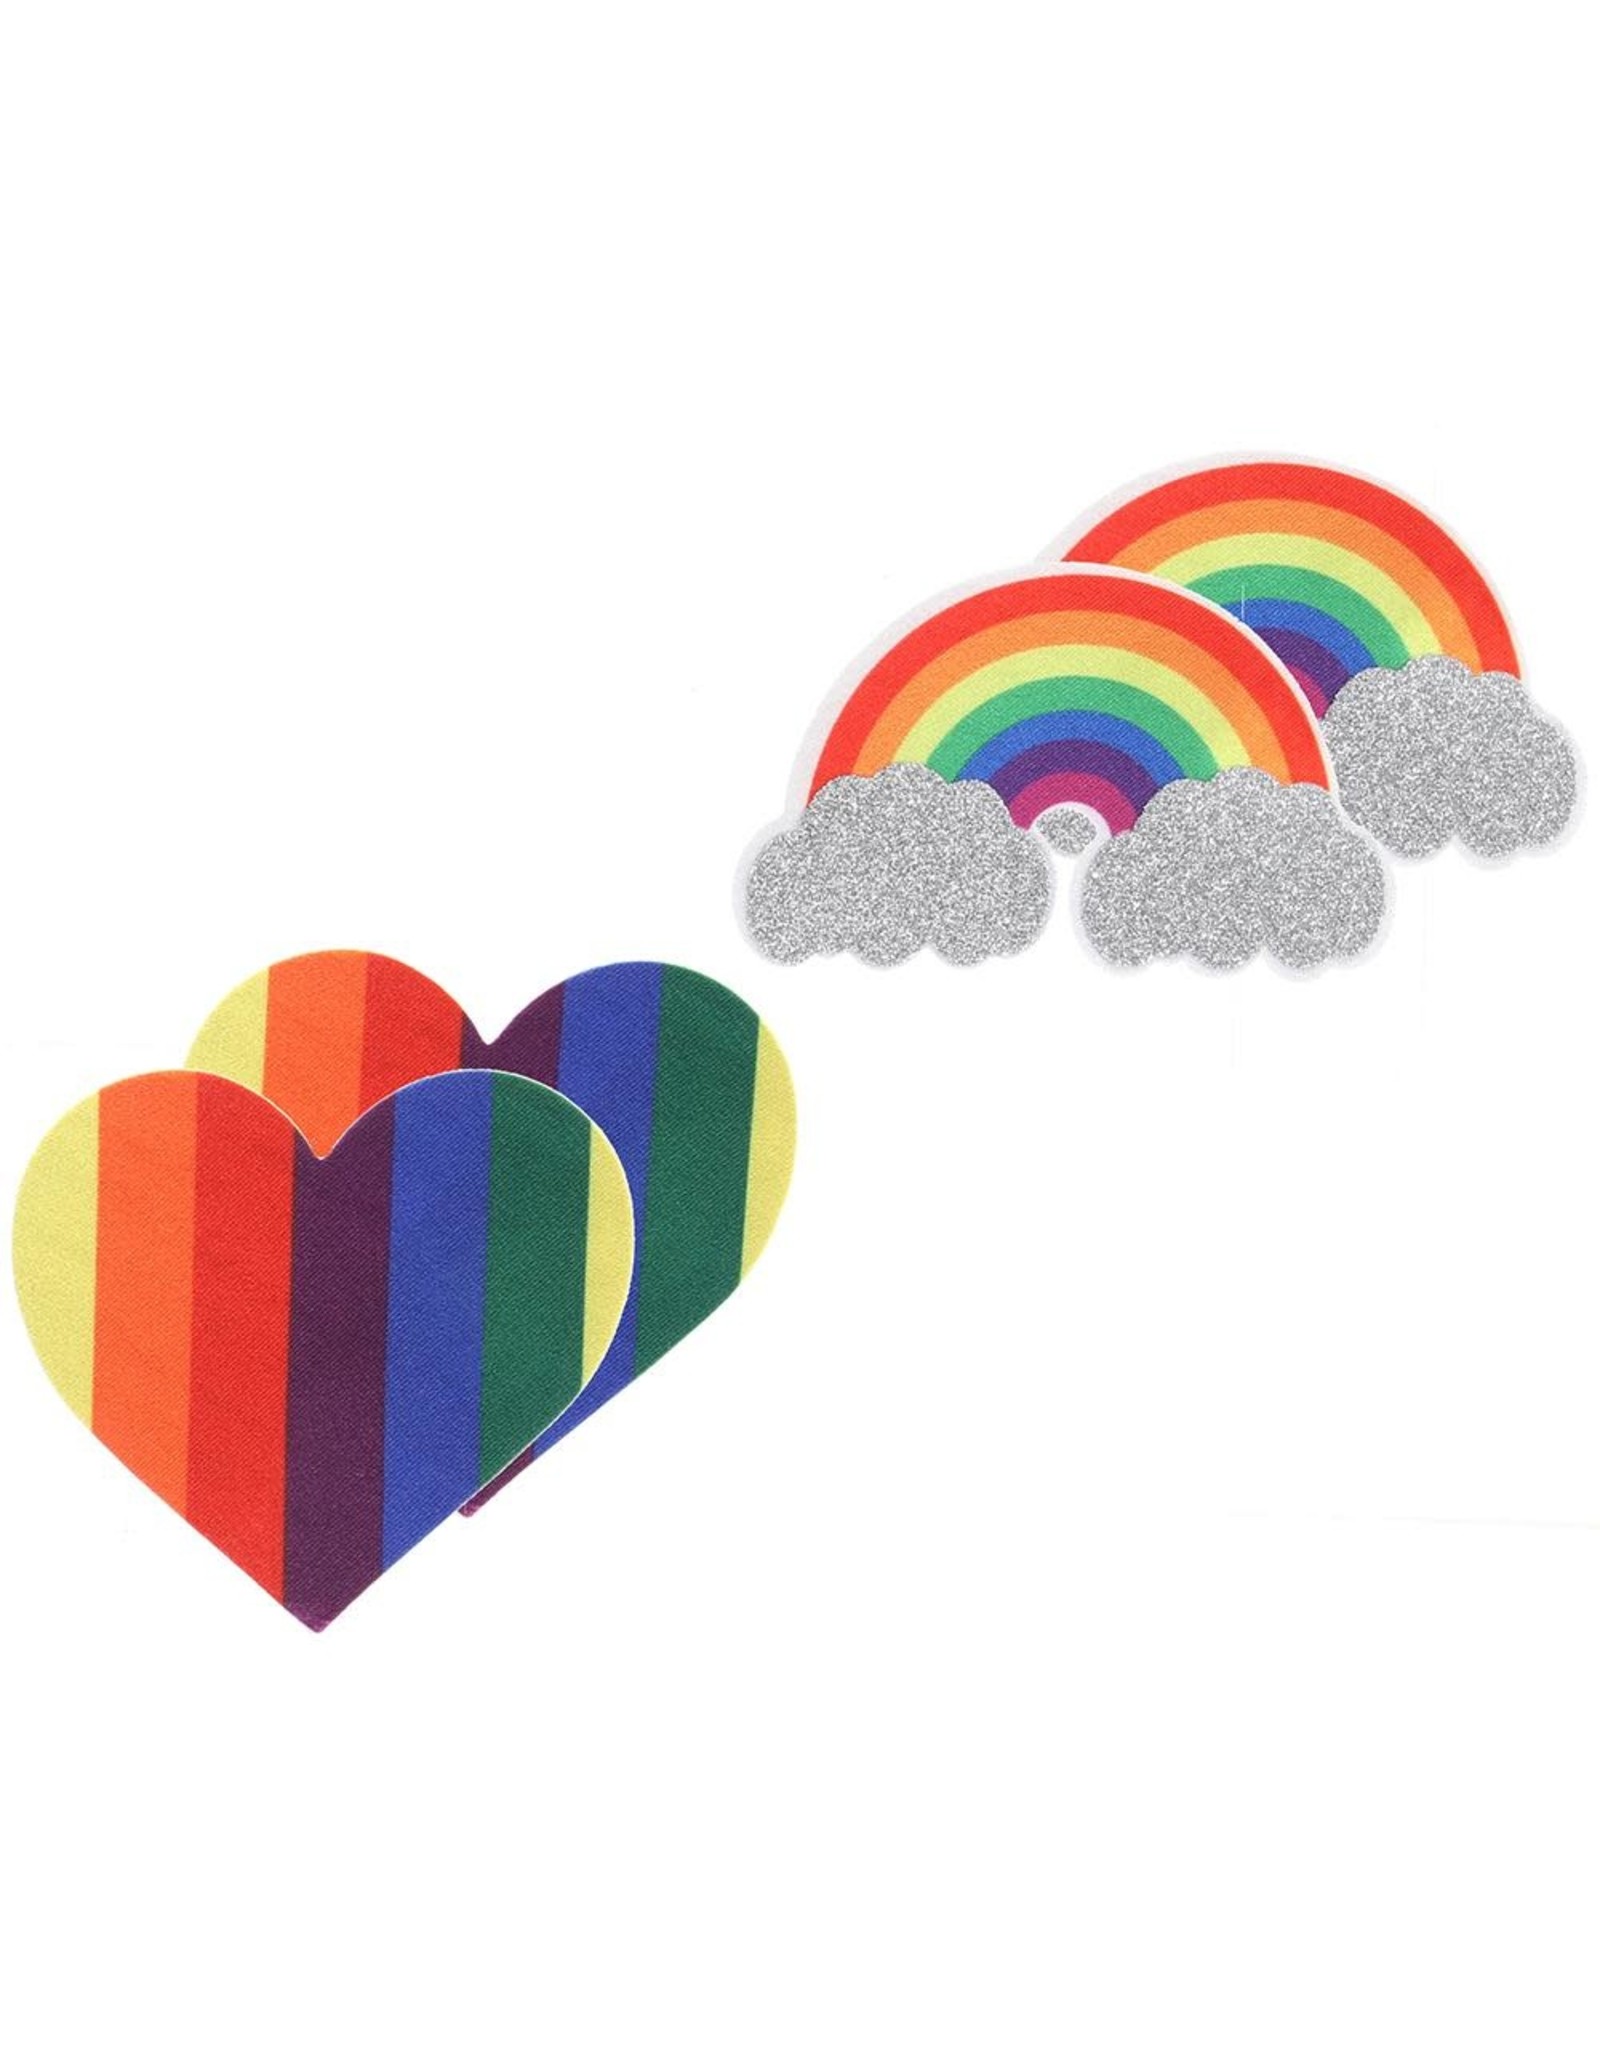 Peekaboos Pride Glitter, Rainbows & Hearts Pasties